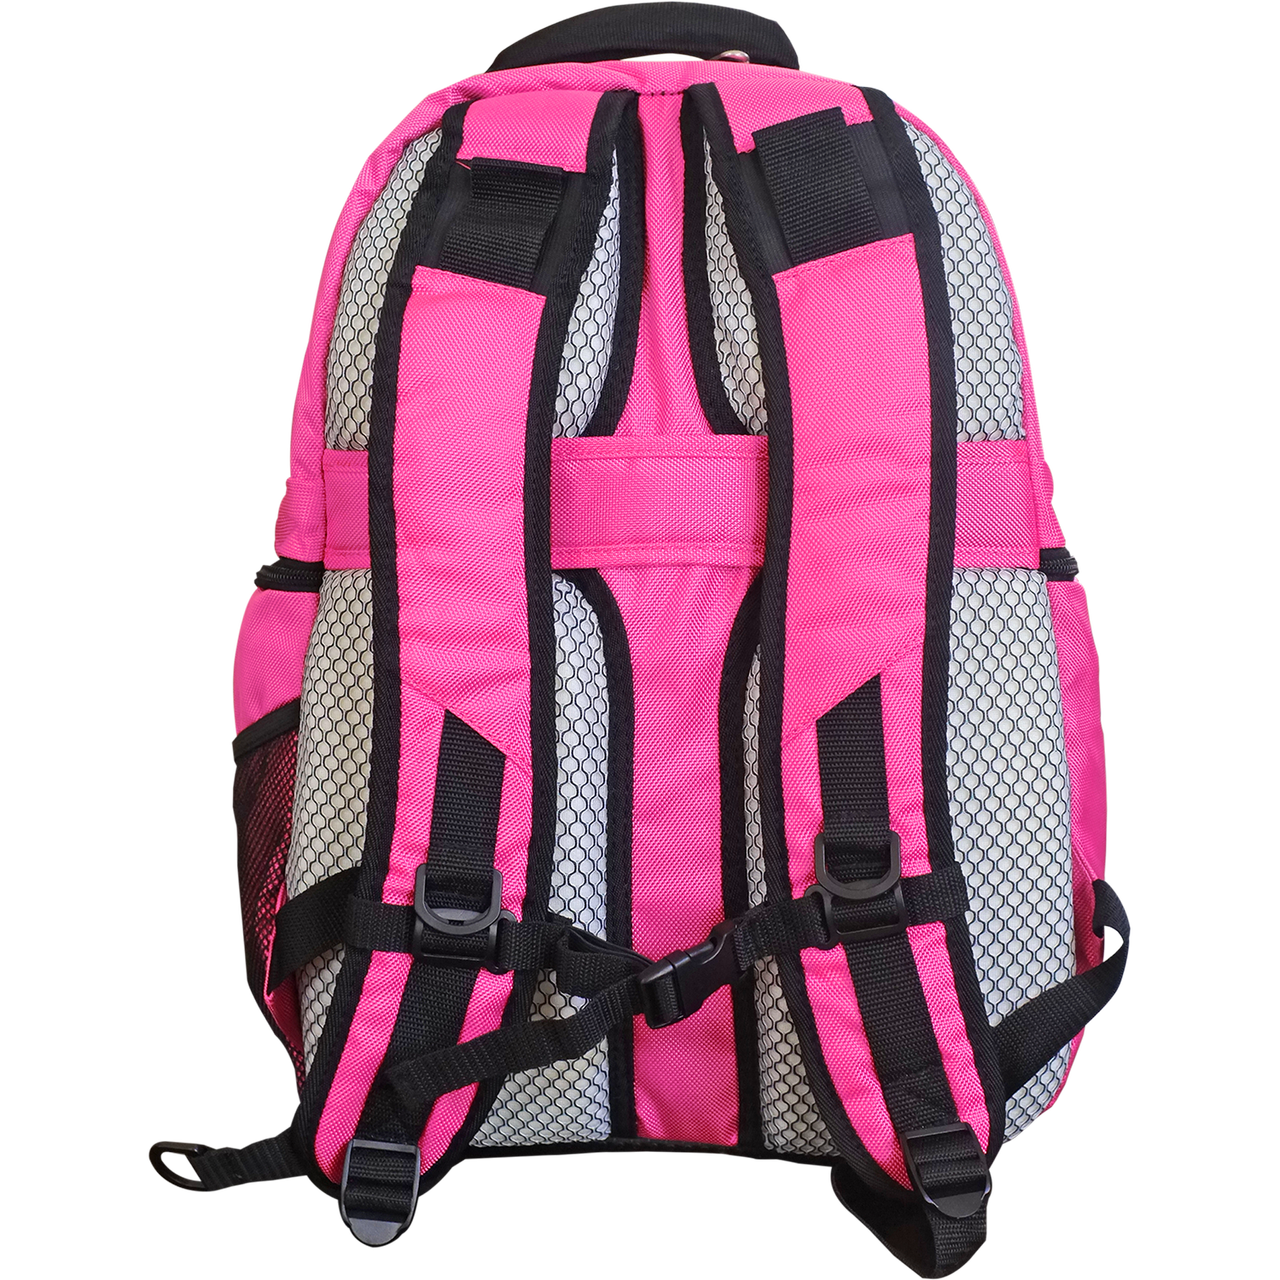 Bills Backpack | Buffalo Bills Premium Laptop Backpack